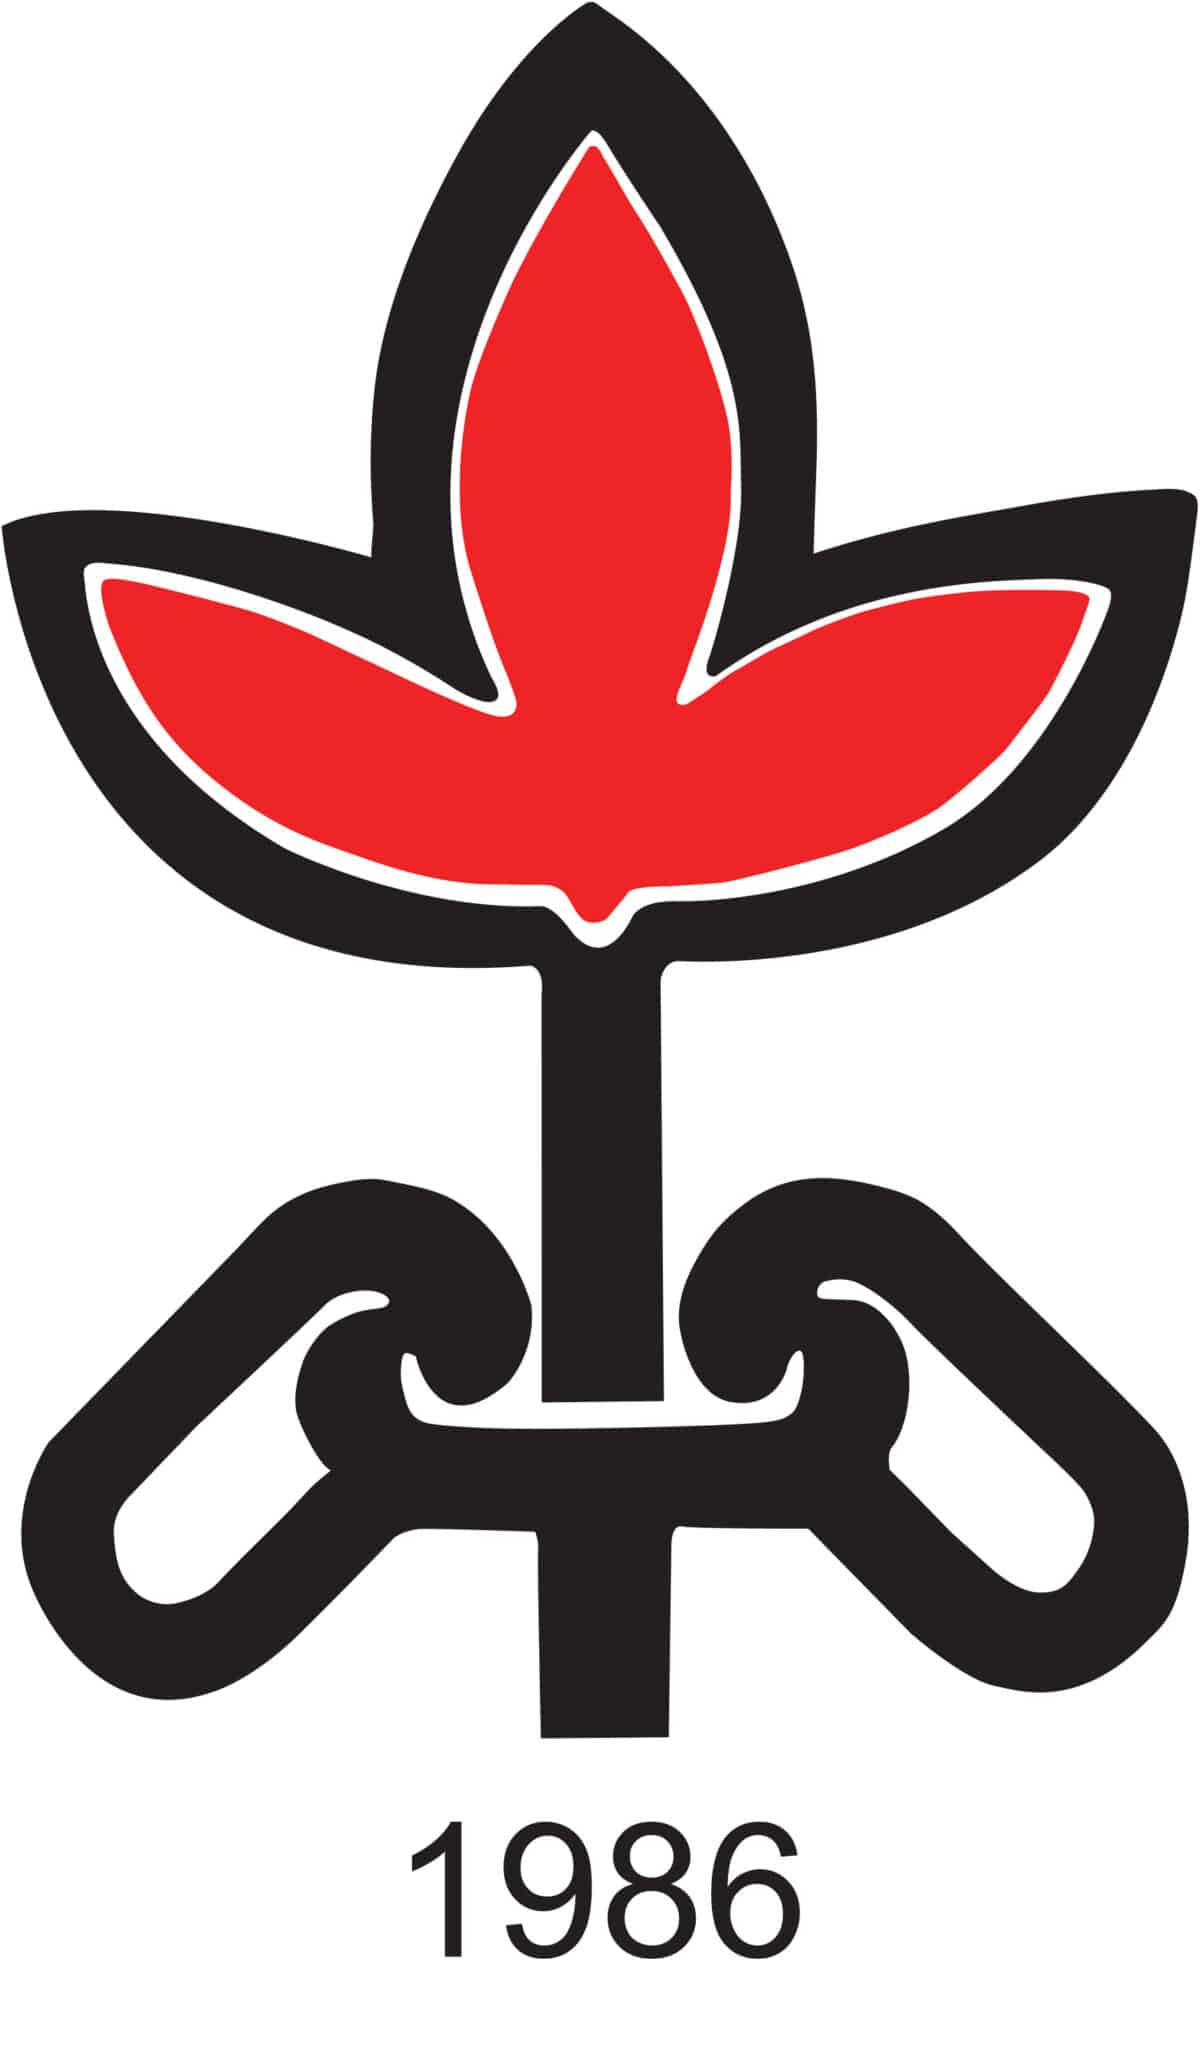 Human Rights Association - logo